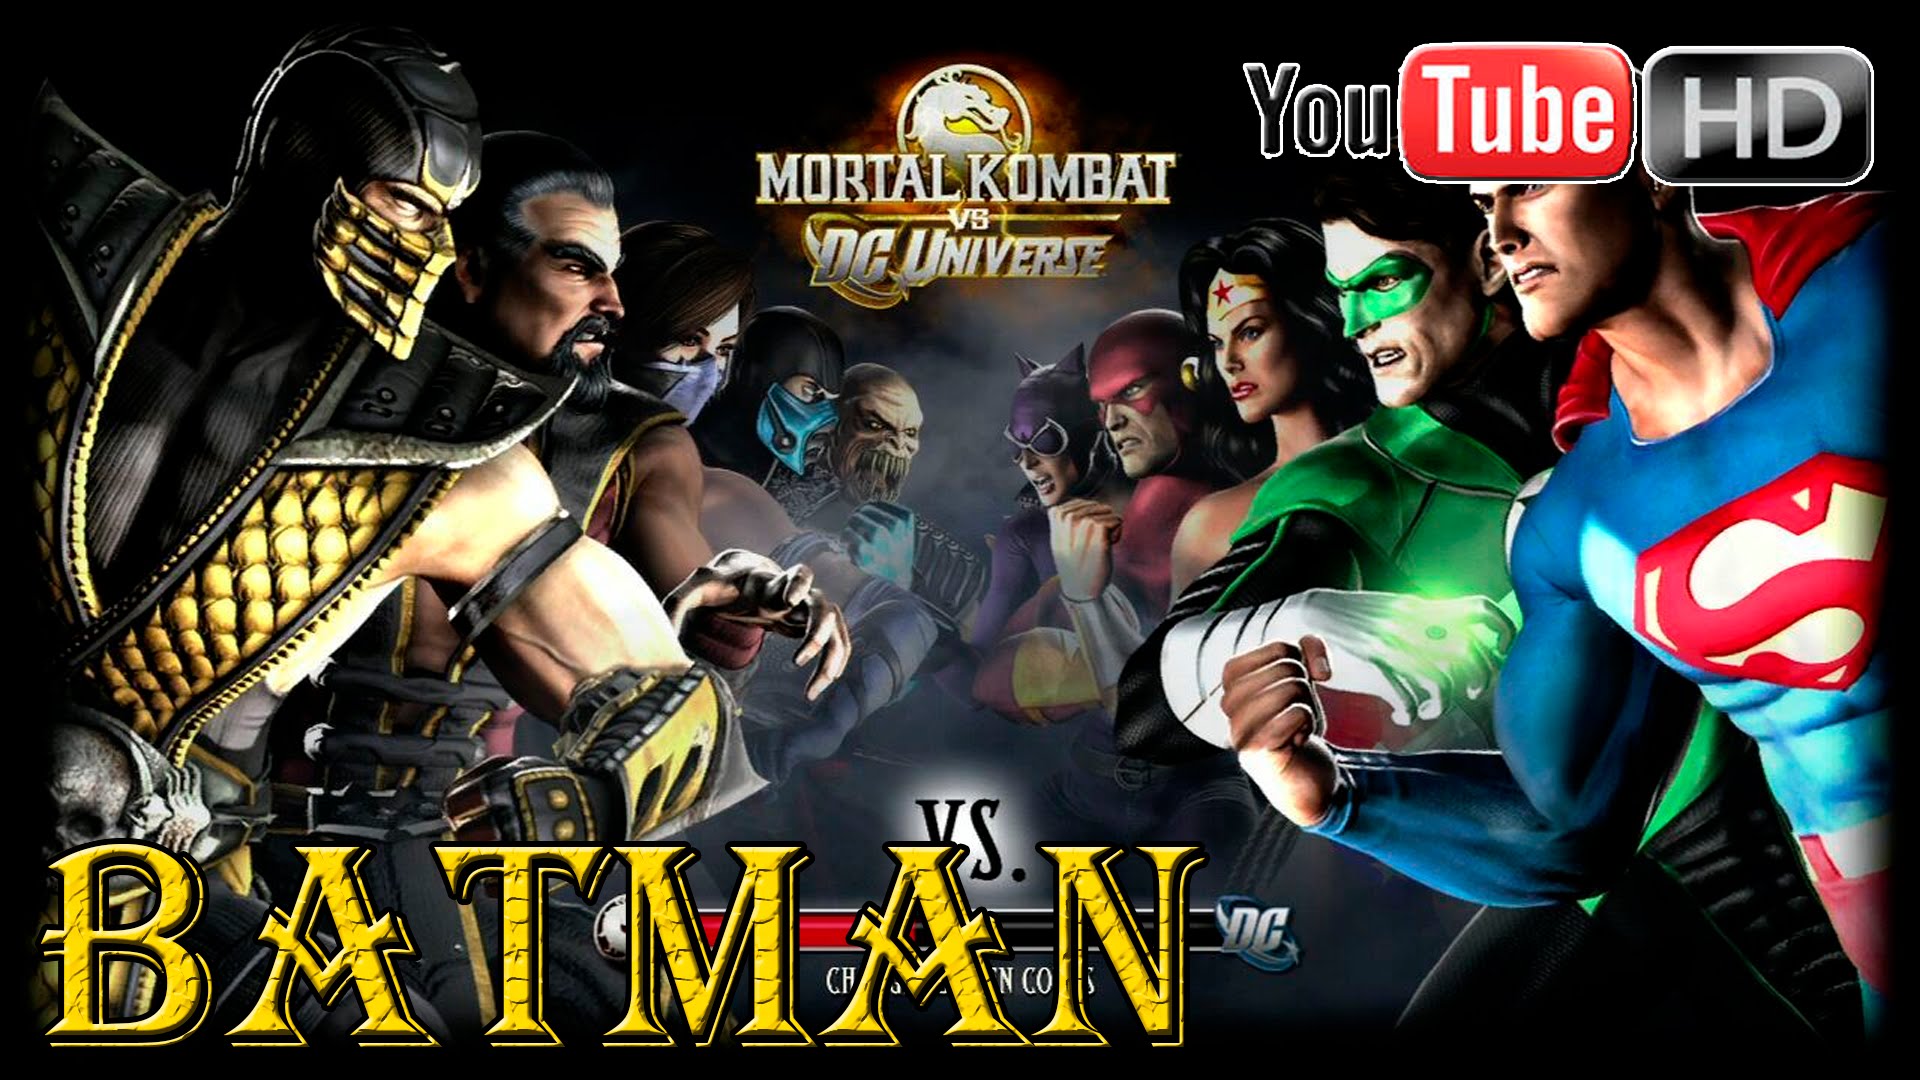 Mortal Kombat Vs. DC Universe #21